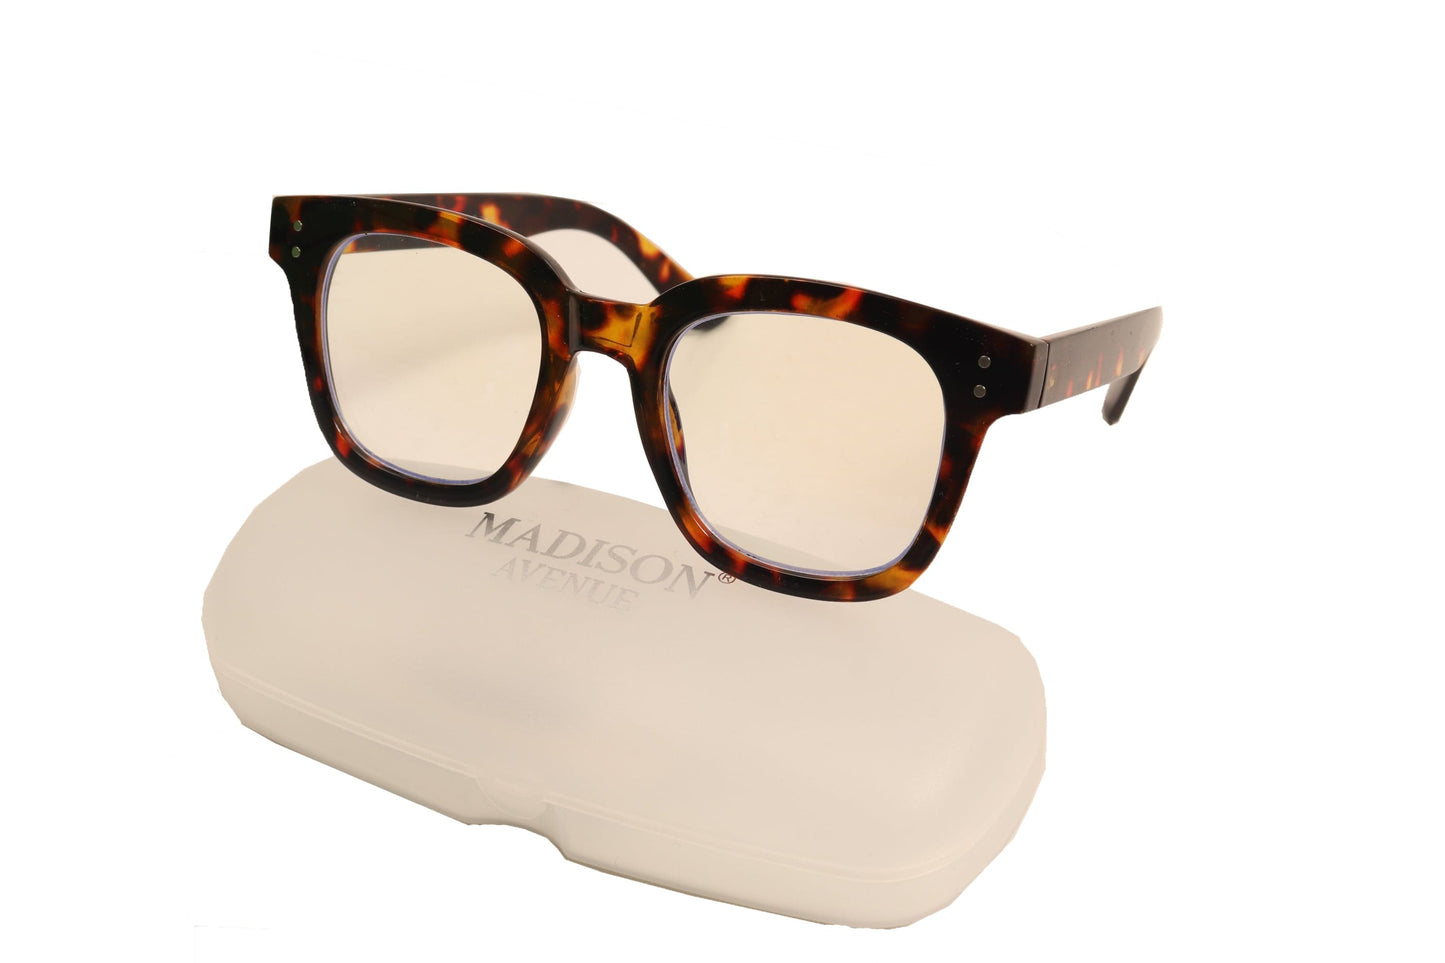 MAISON AVENUE General Merchandise MAISON AVENUE - Beautiful Eyeglasses